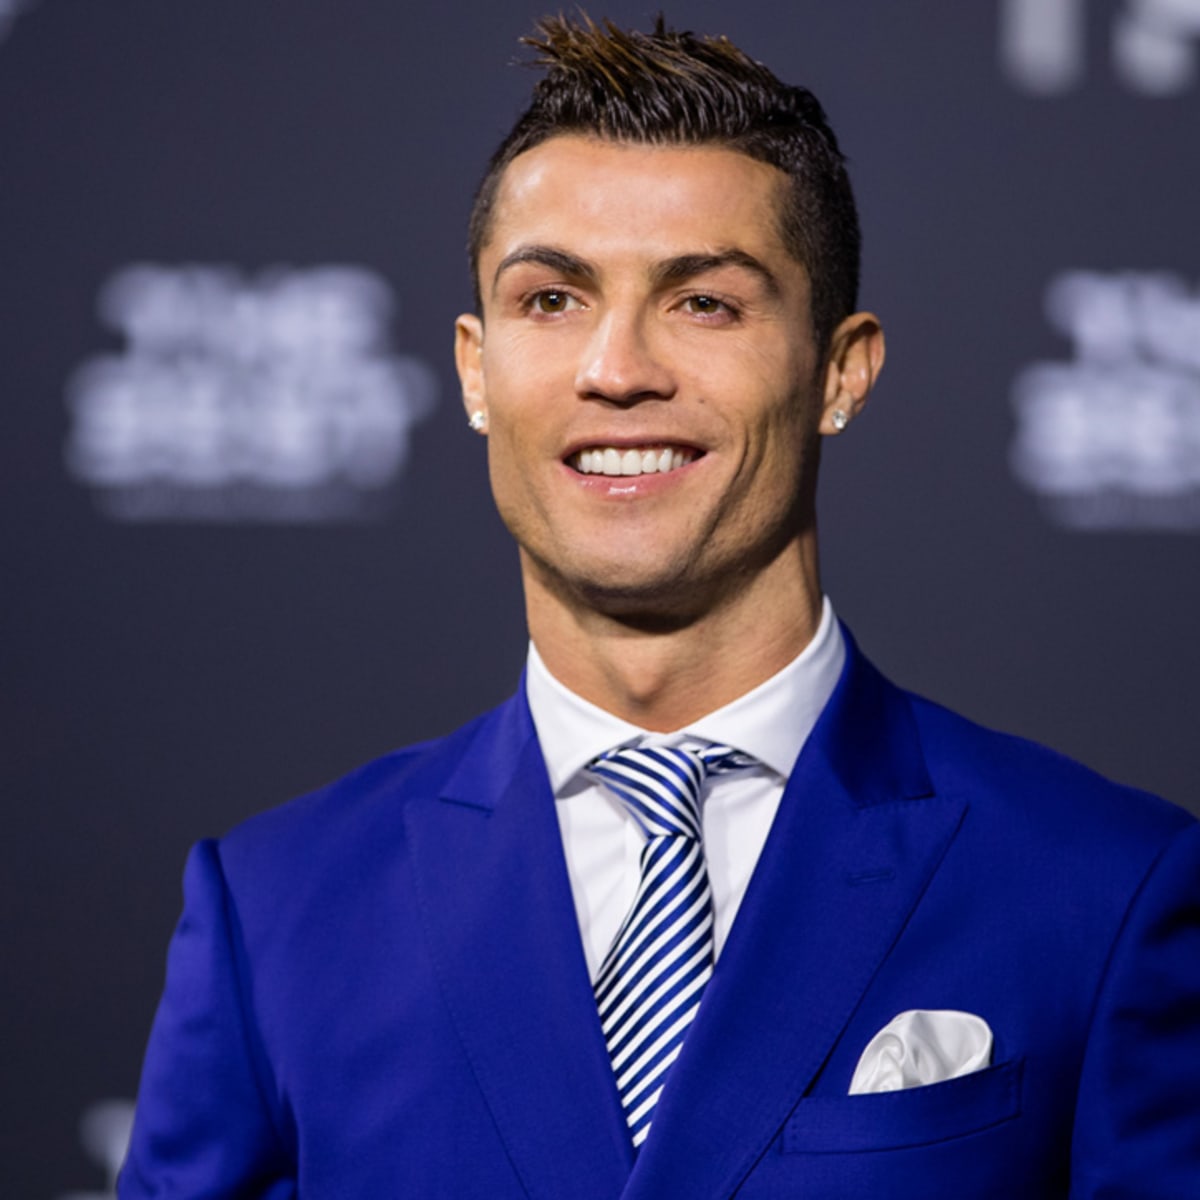 Cristiano Ronaldo attends at Madrid Open Tennis